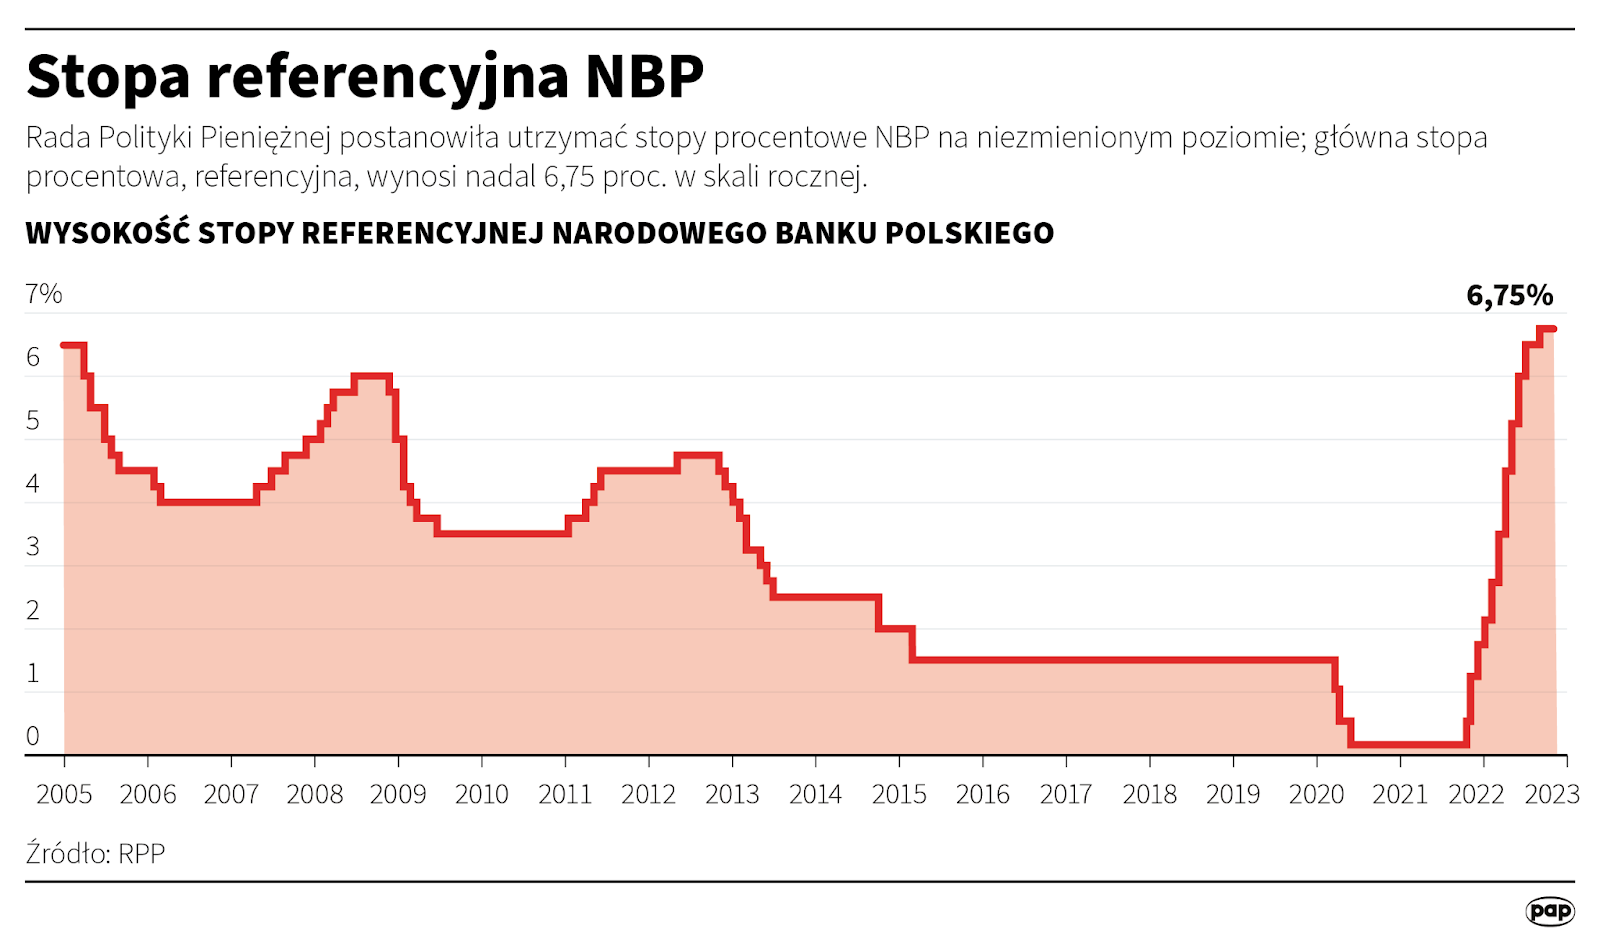 Stopa referencyjna NBP październik 2022